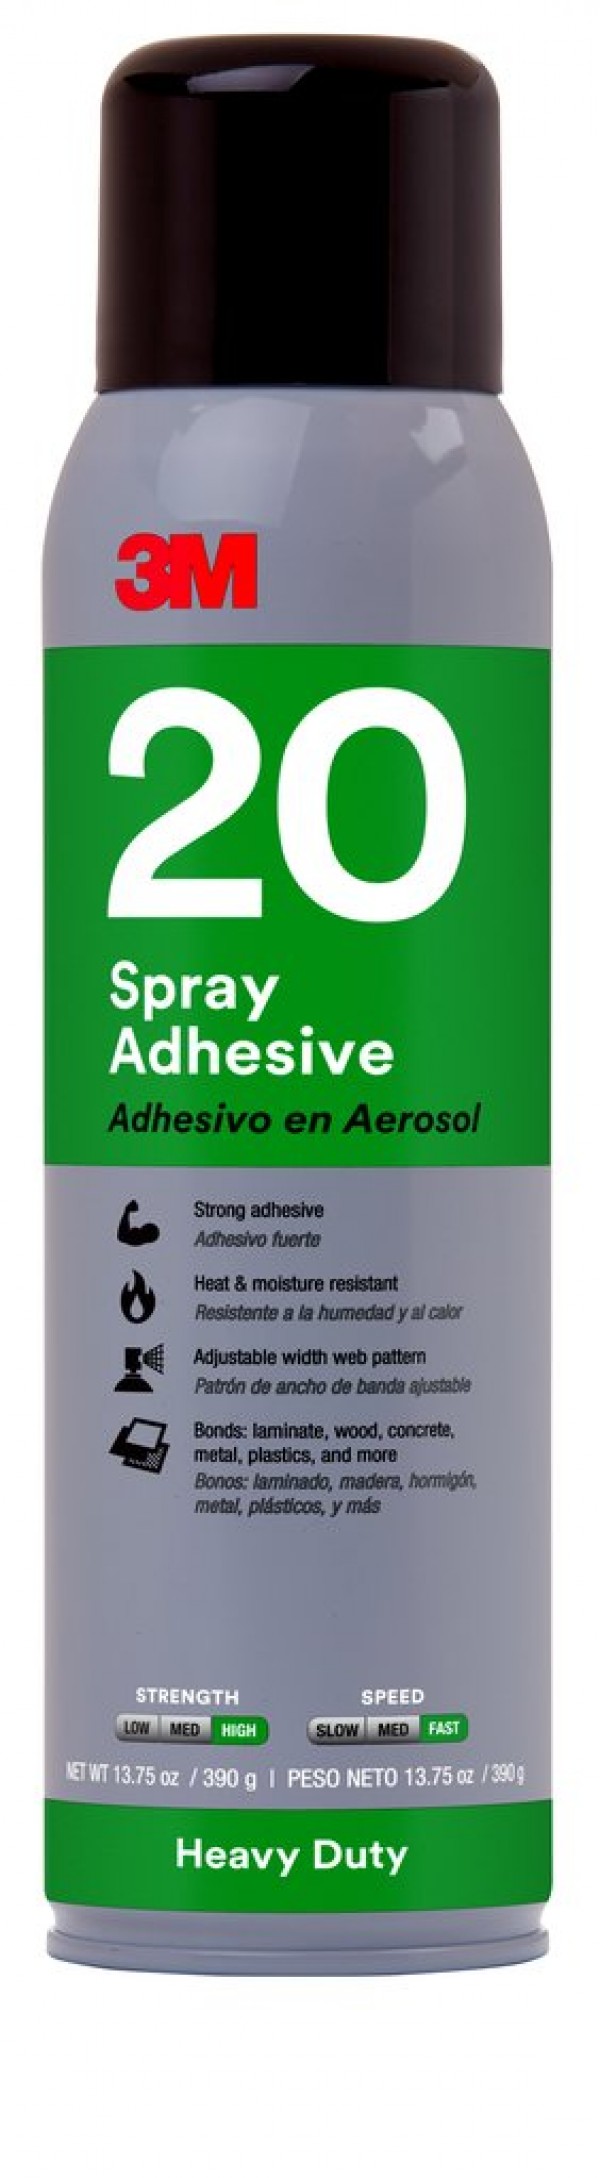 3M™ Heavy Duty 20 Spray Adhesive Clear, Net Wt 13.8 oz, 12 cans per case